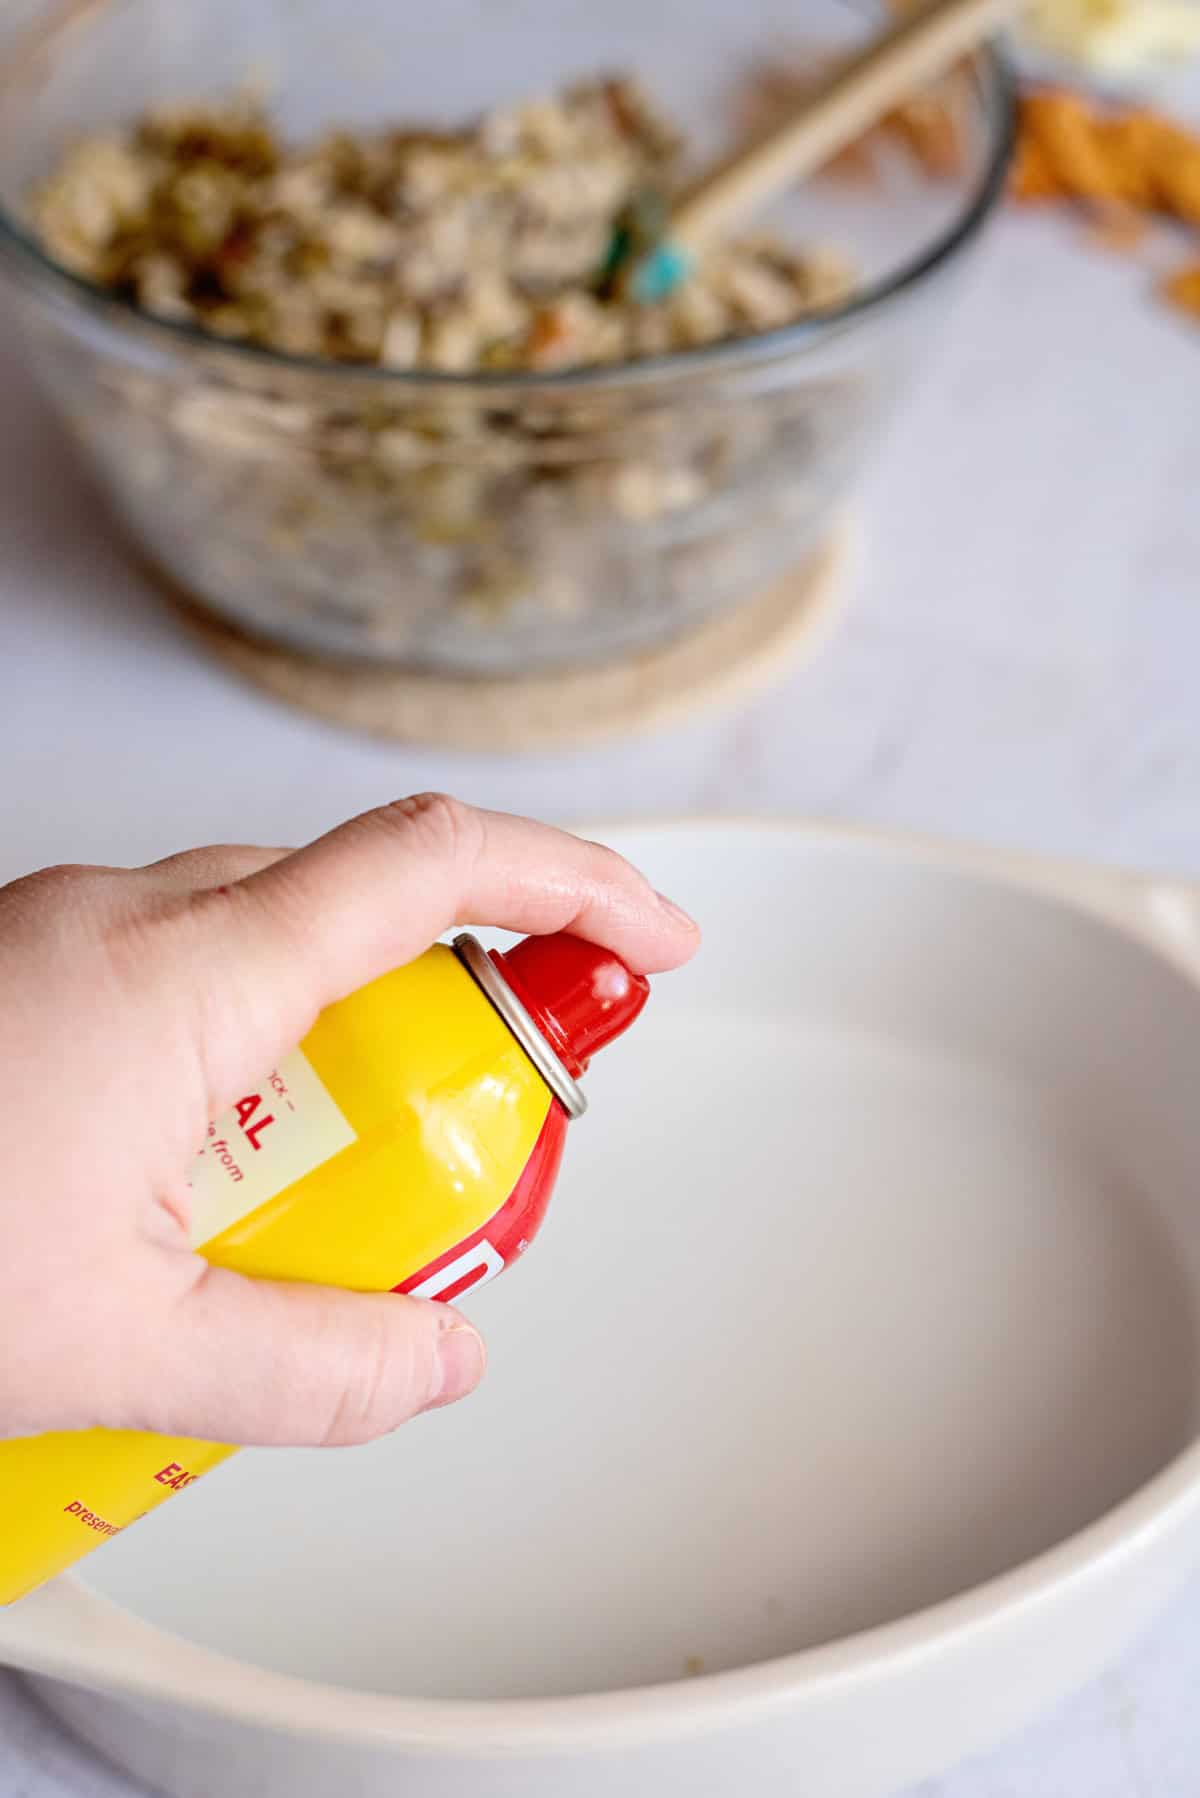 spray a casserole dish with non-stick spray